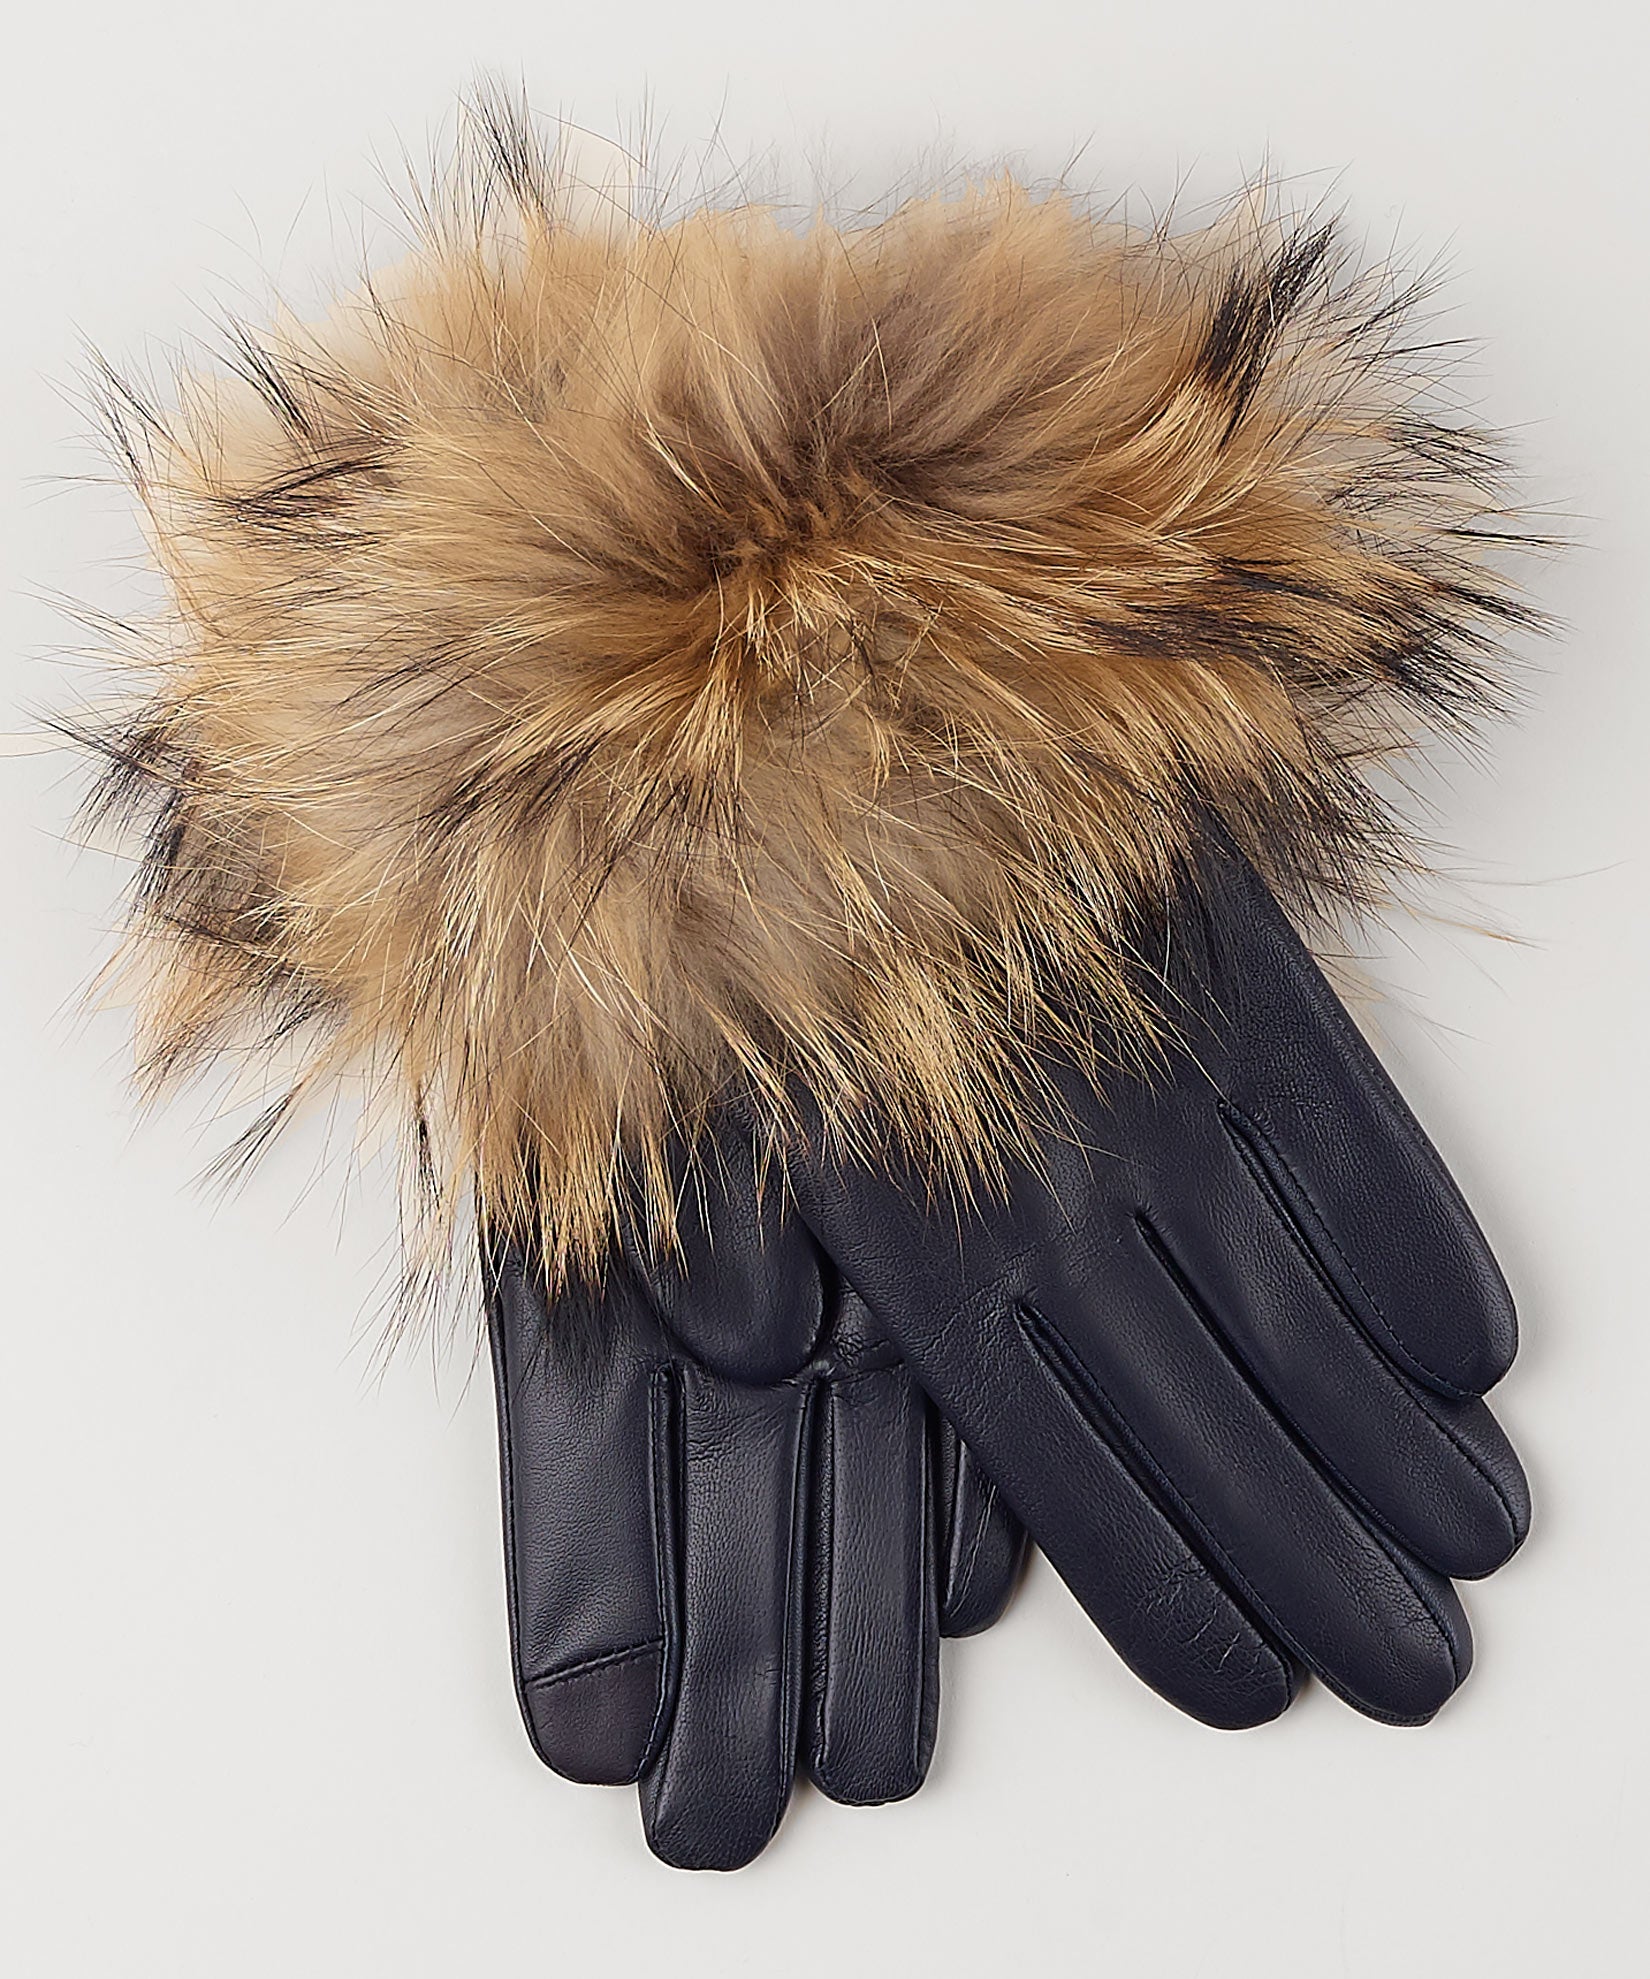 Fur Cuff Glove in color Navy